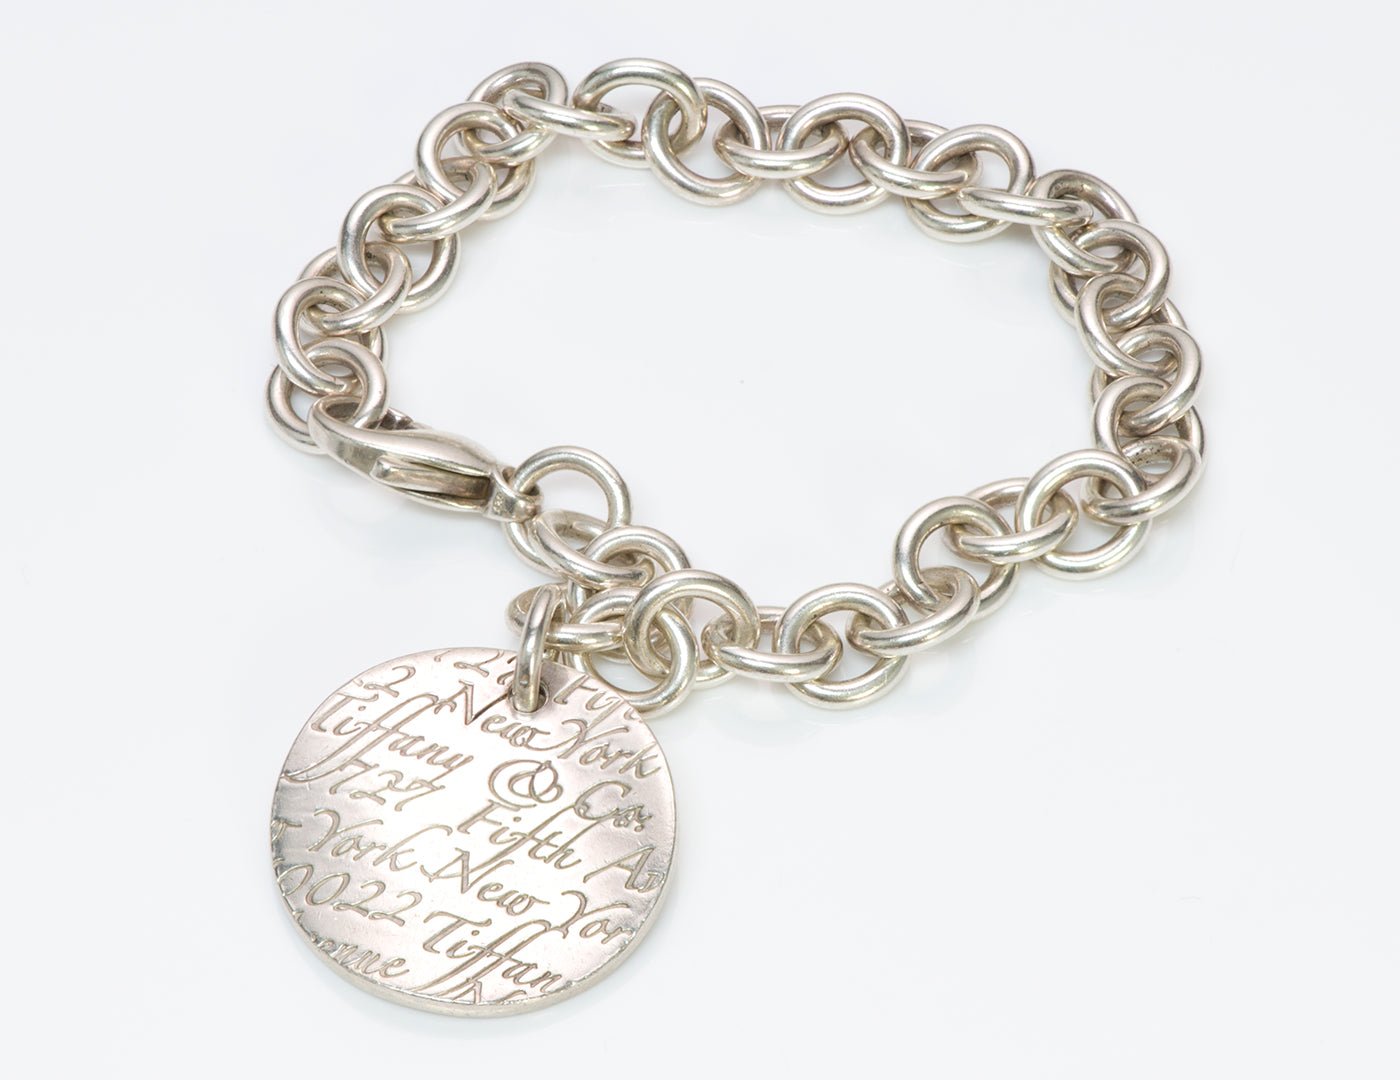 Tiffany & Co. Fifth Ave 727 Silver Charm Bracelet